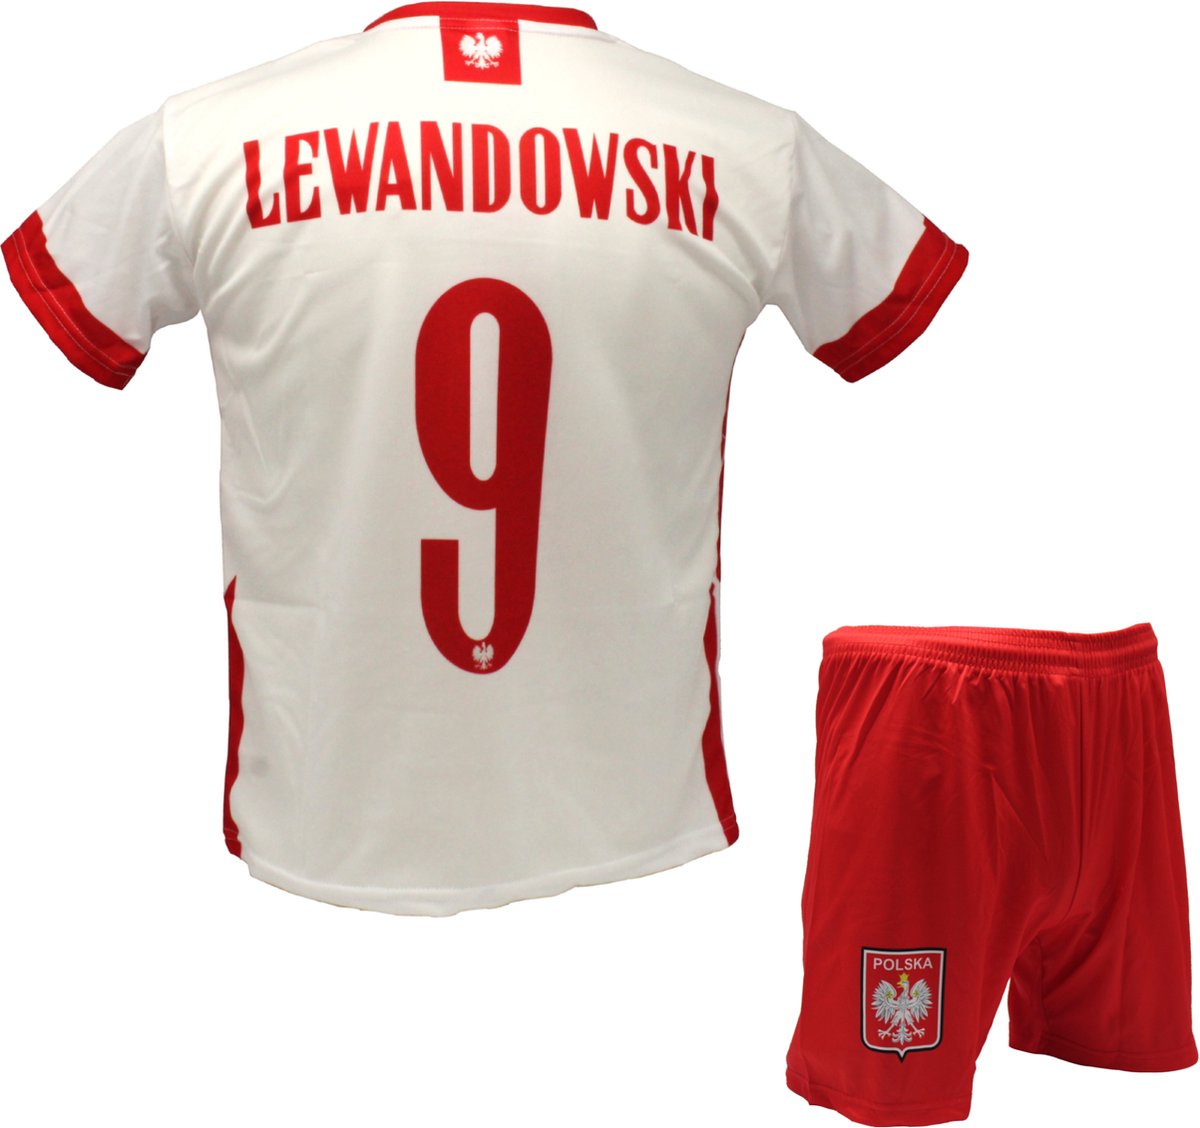 Robert Lewandowski| 2021/2022 Polen Tenue | Voetbal Shirt + broekje set - EK/WK voetbaltenue - Maat XXXL